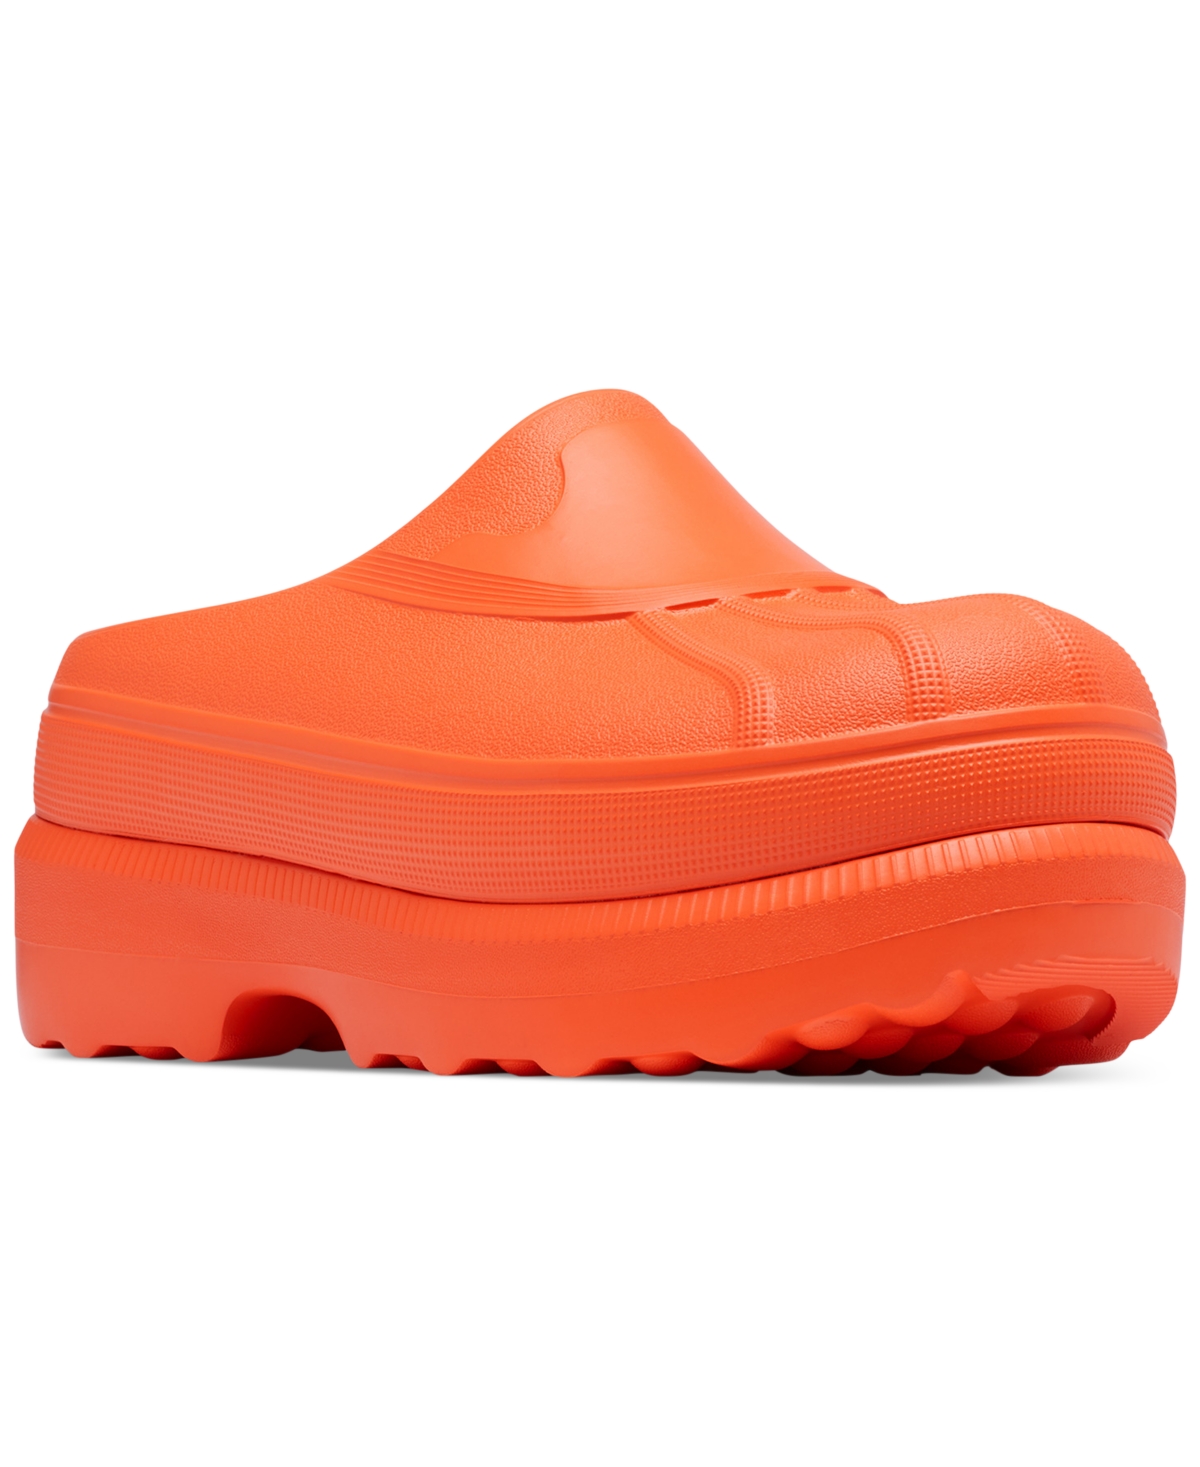 Women's Caribou Slip-On Platform Clogs - Optimized Orange, Optimized Orange